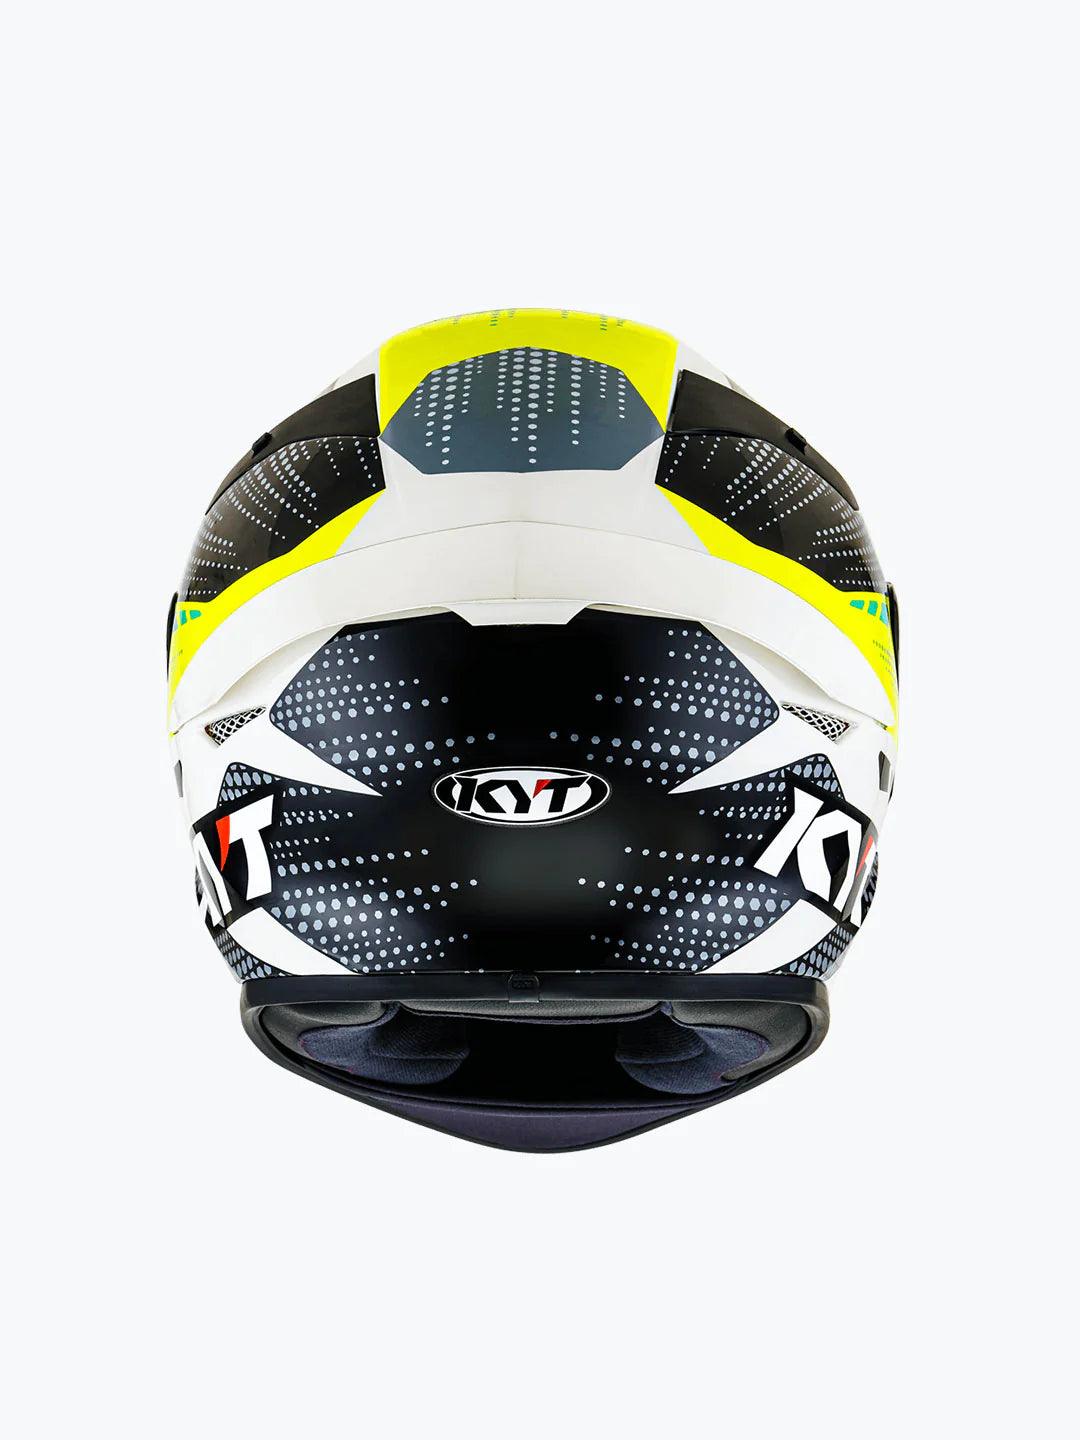 KYT TT Course Gear Black Yellow - Moto Modz